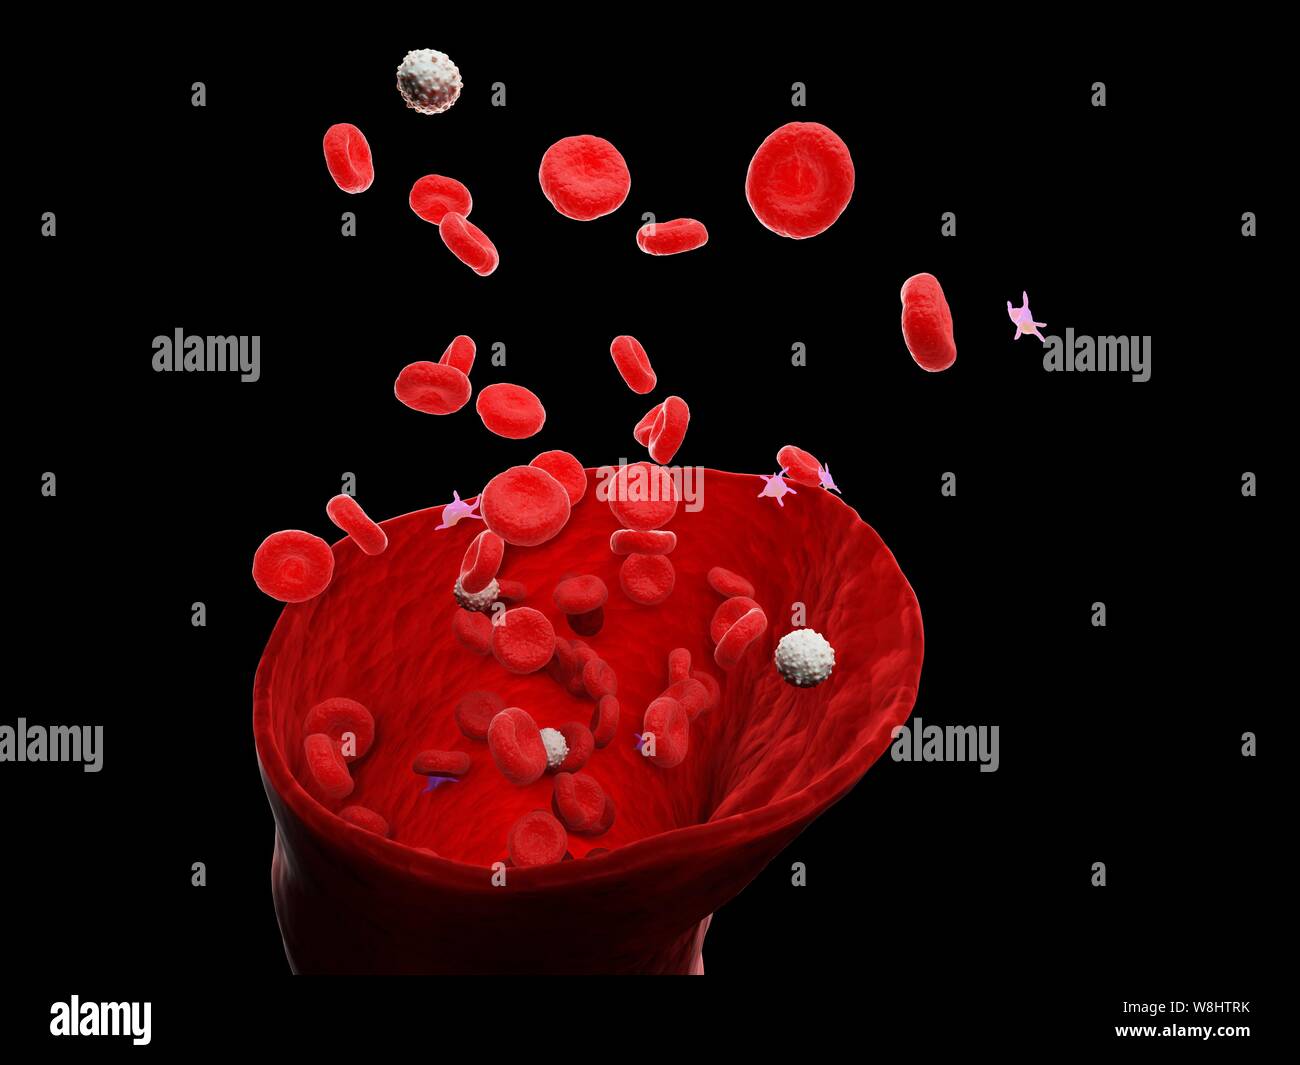 Blood vessel, computer illustration. Stock Photo